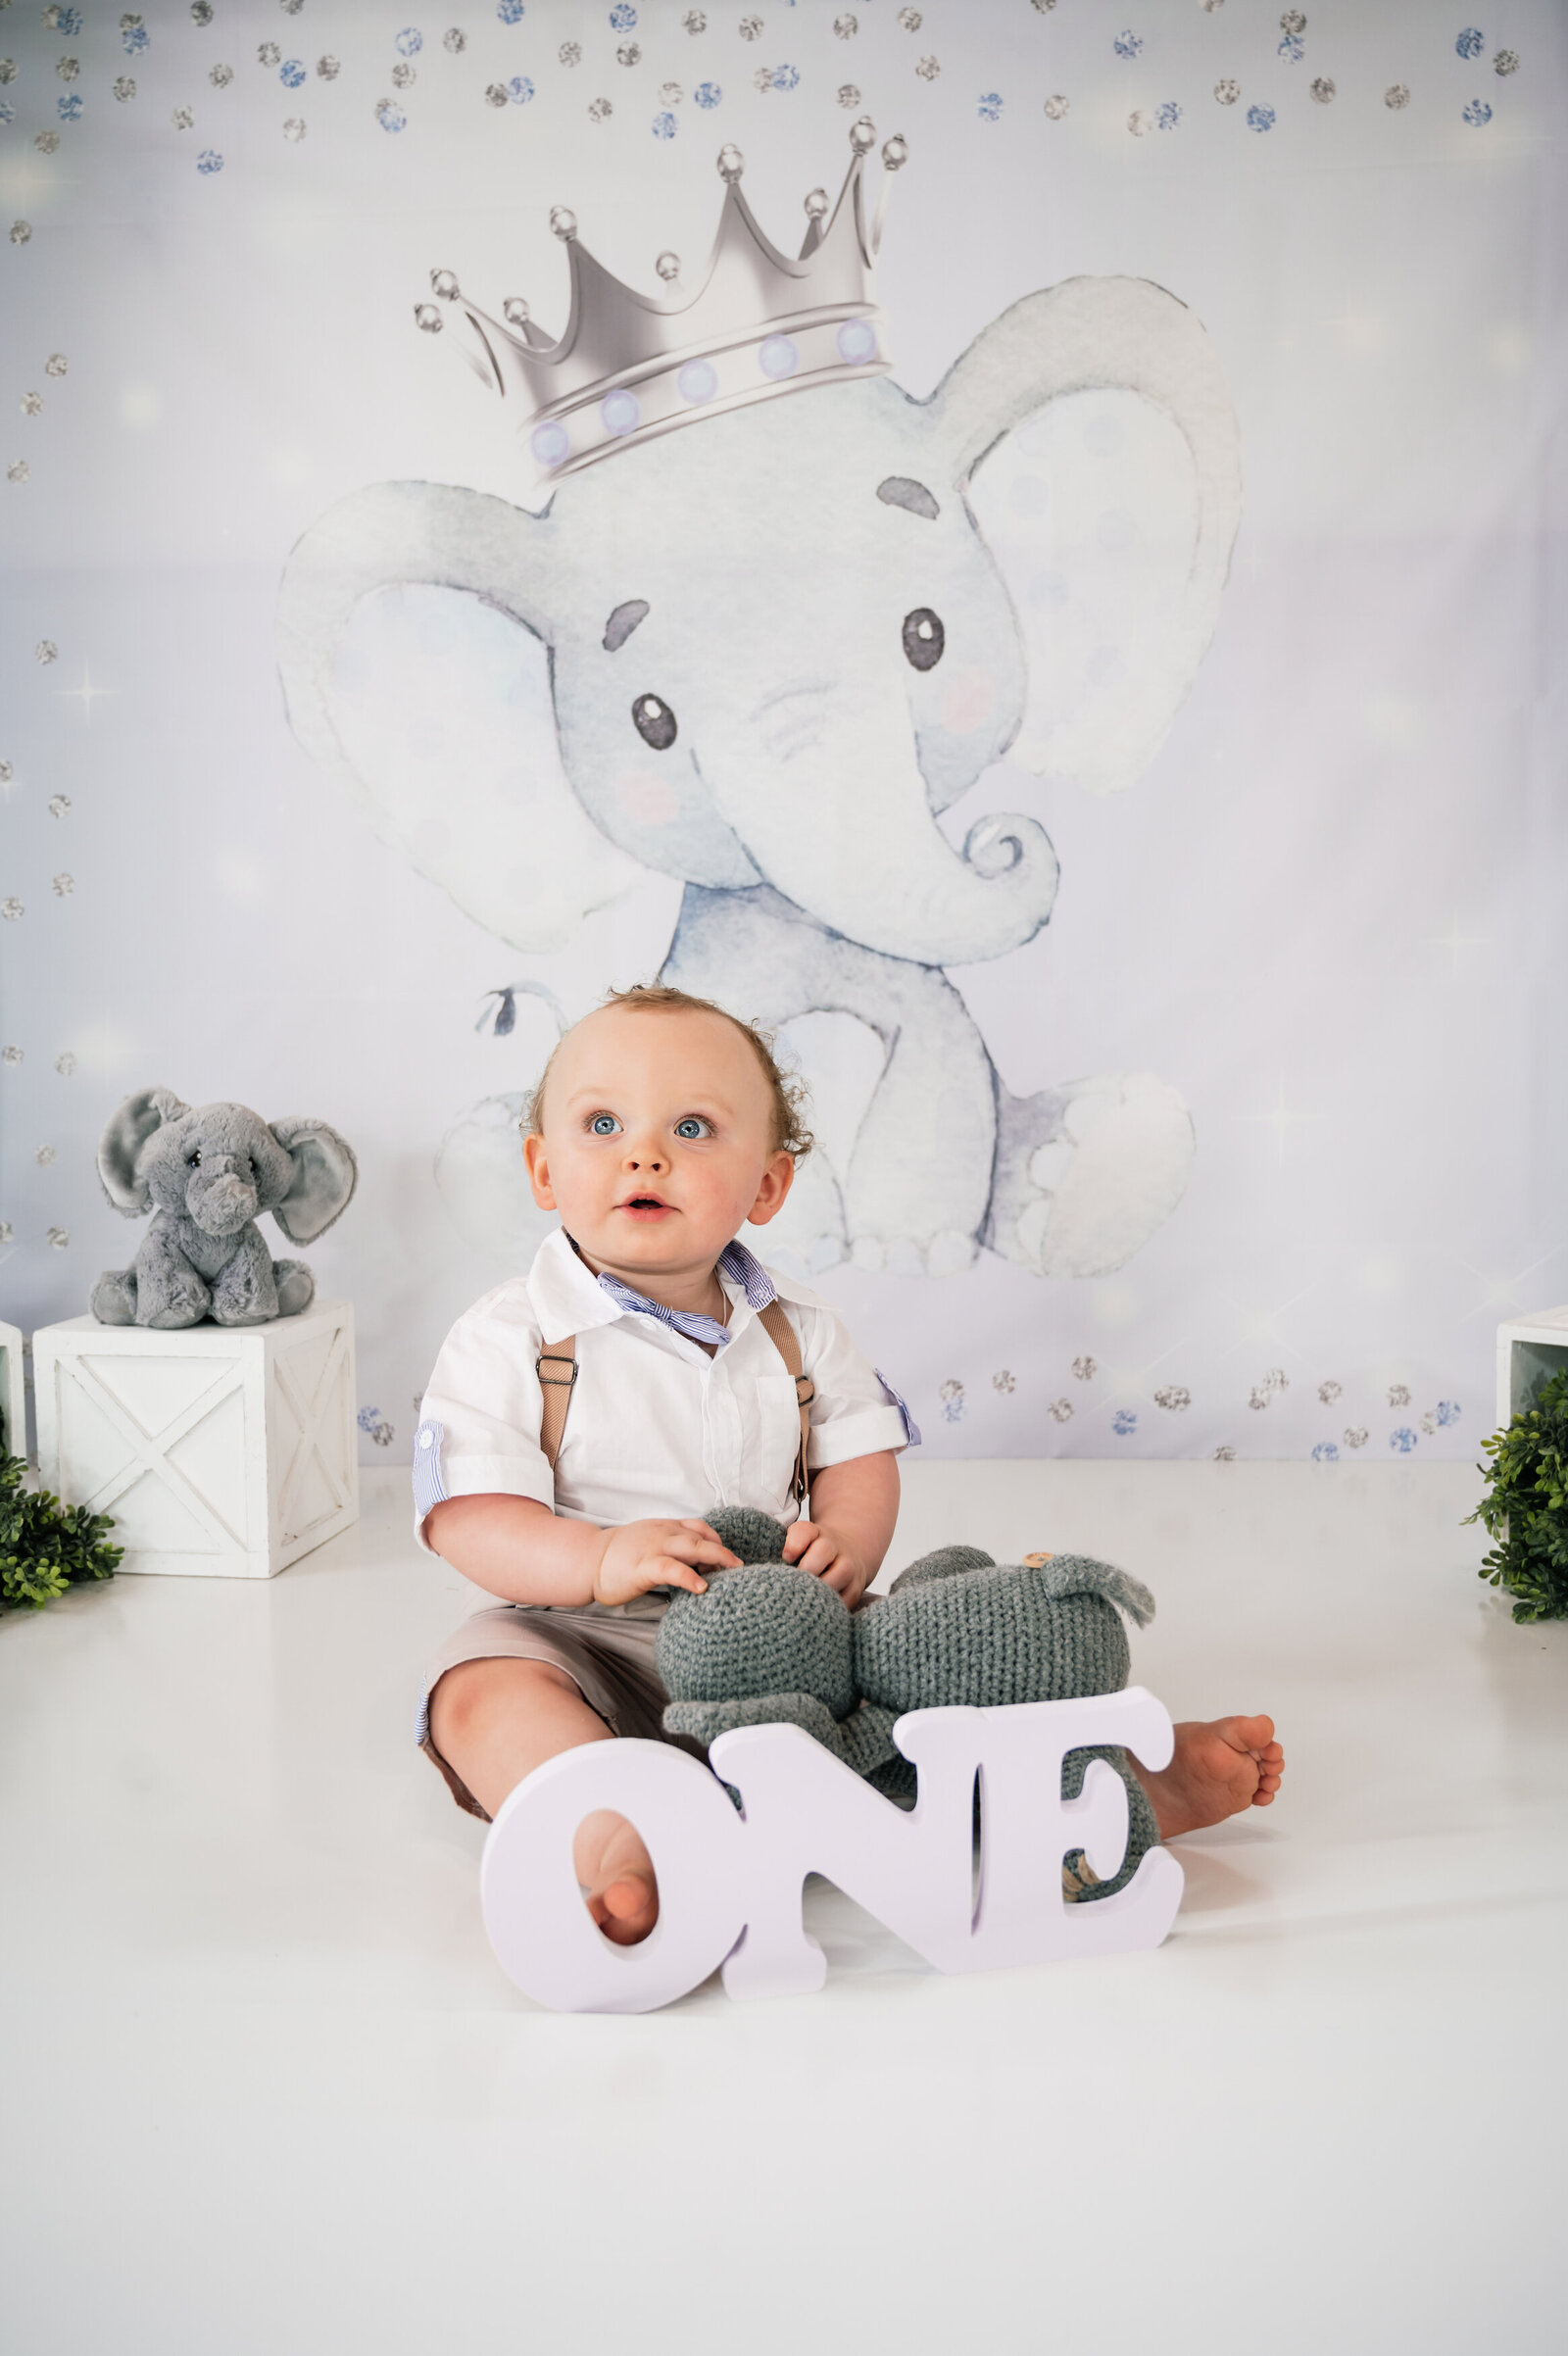 Baby boy celebrating his first birthday in Eaton Rapids photo studio